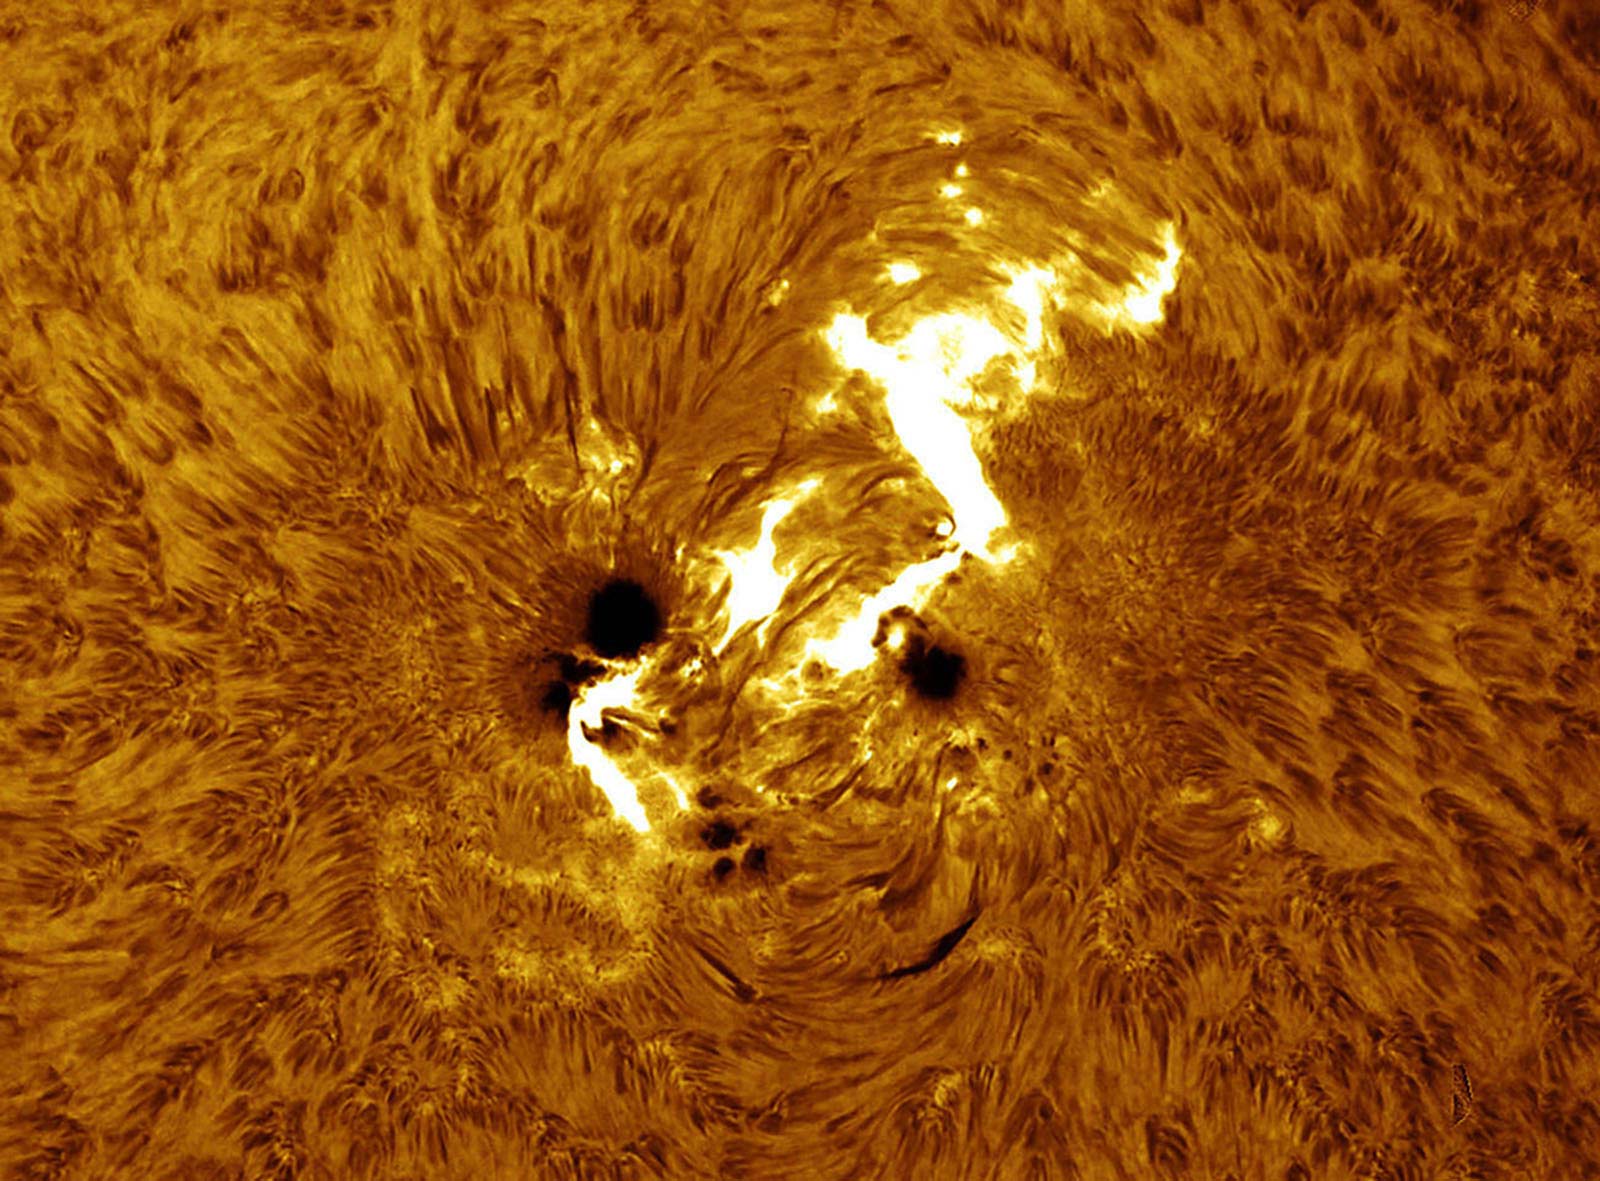 Solar flare erupts near a sunspot as imaged in H-alpha